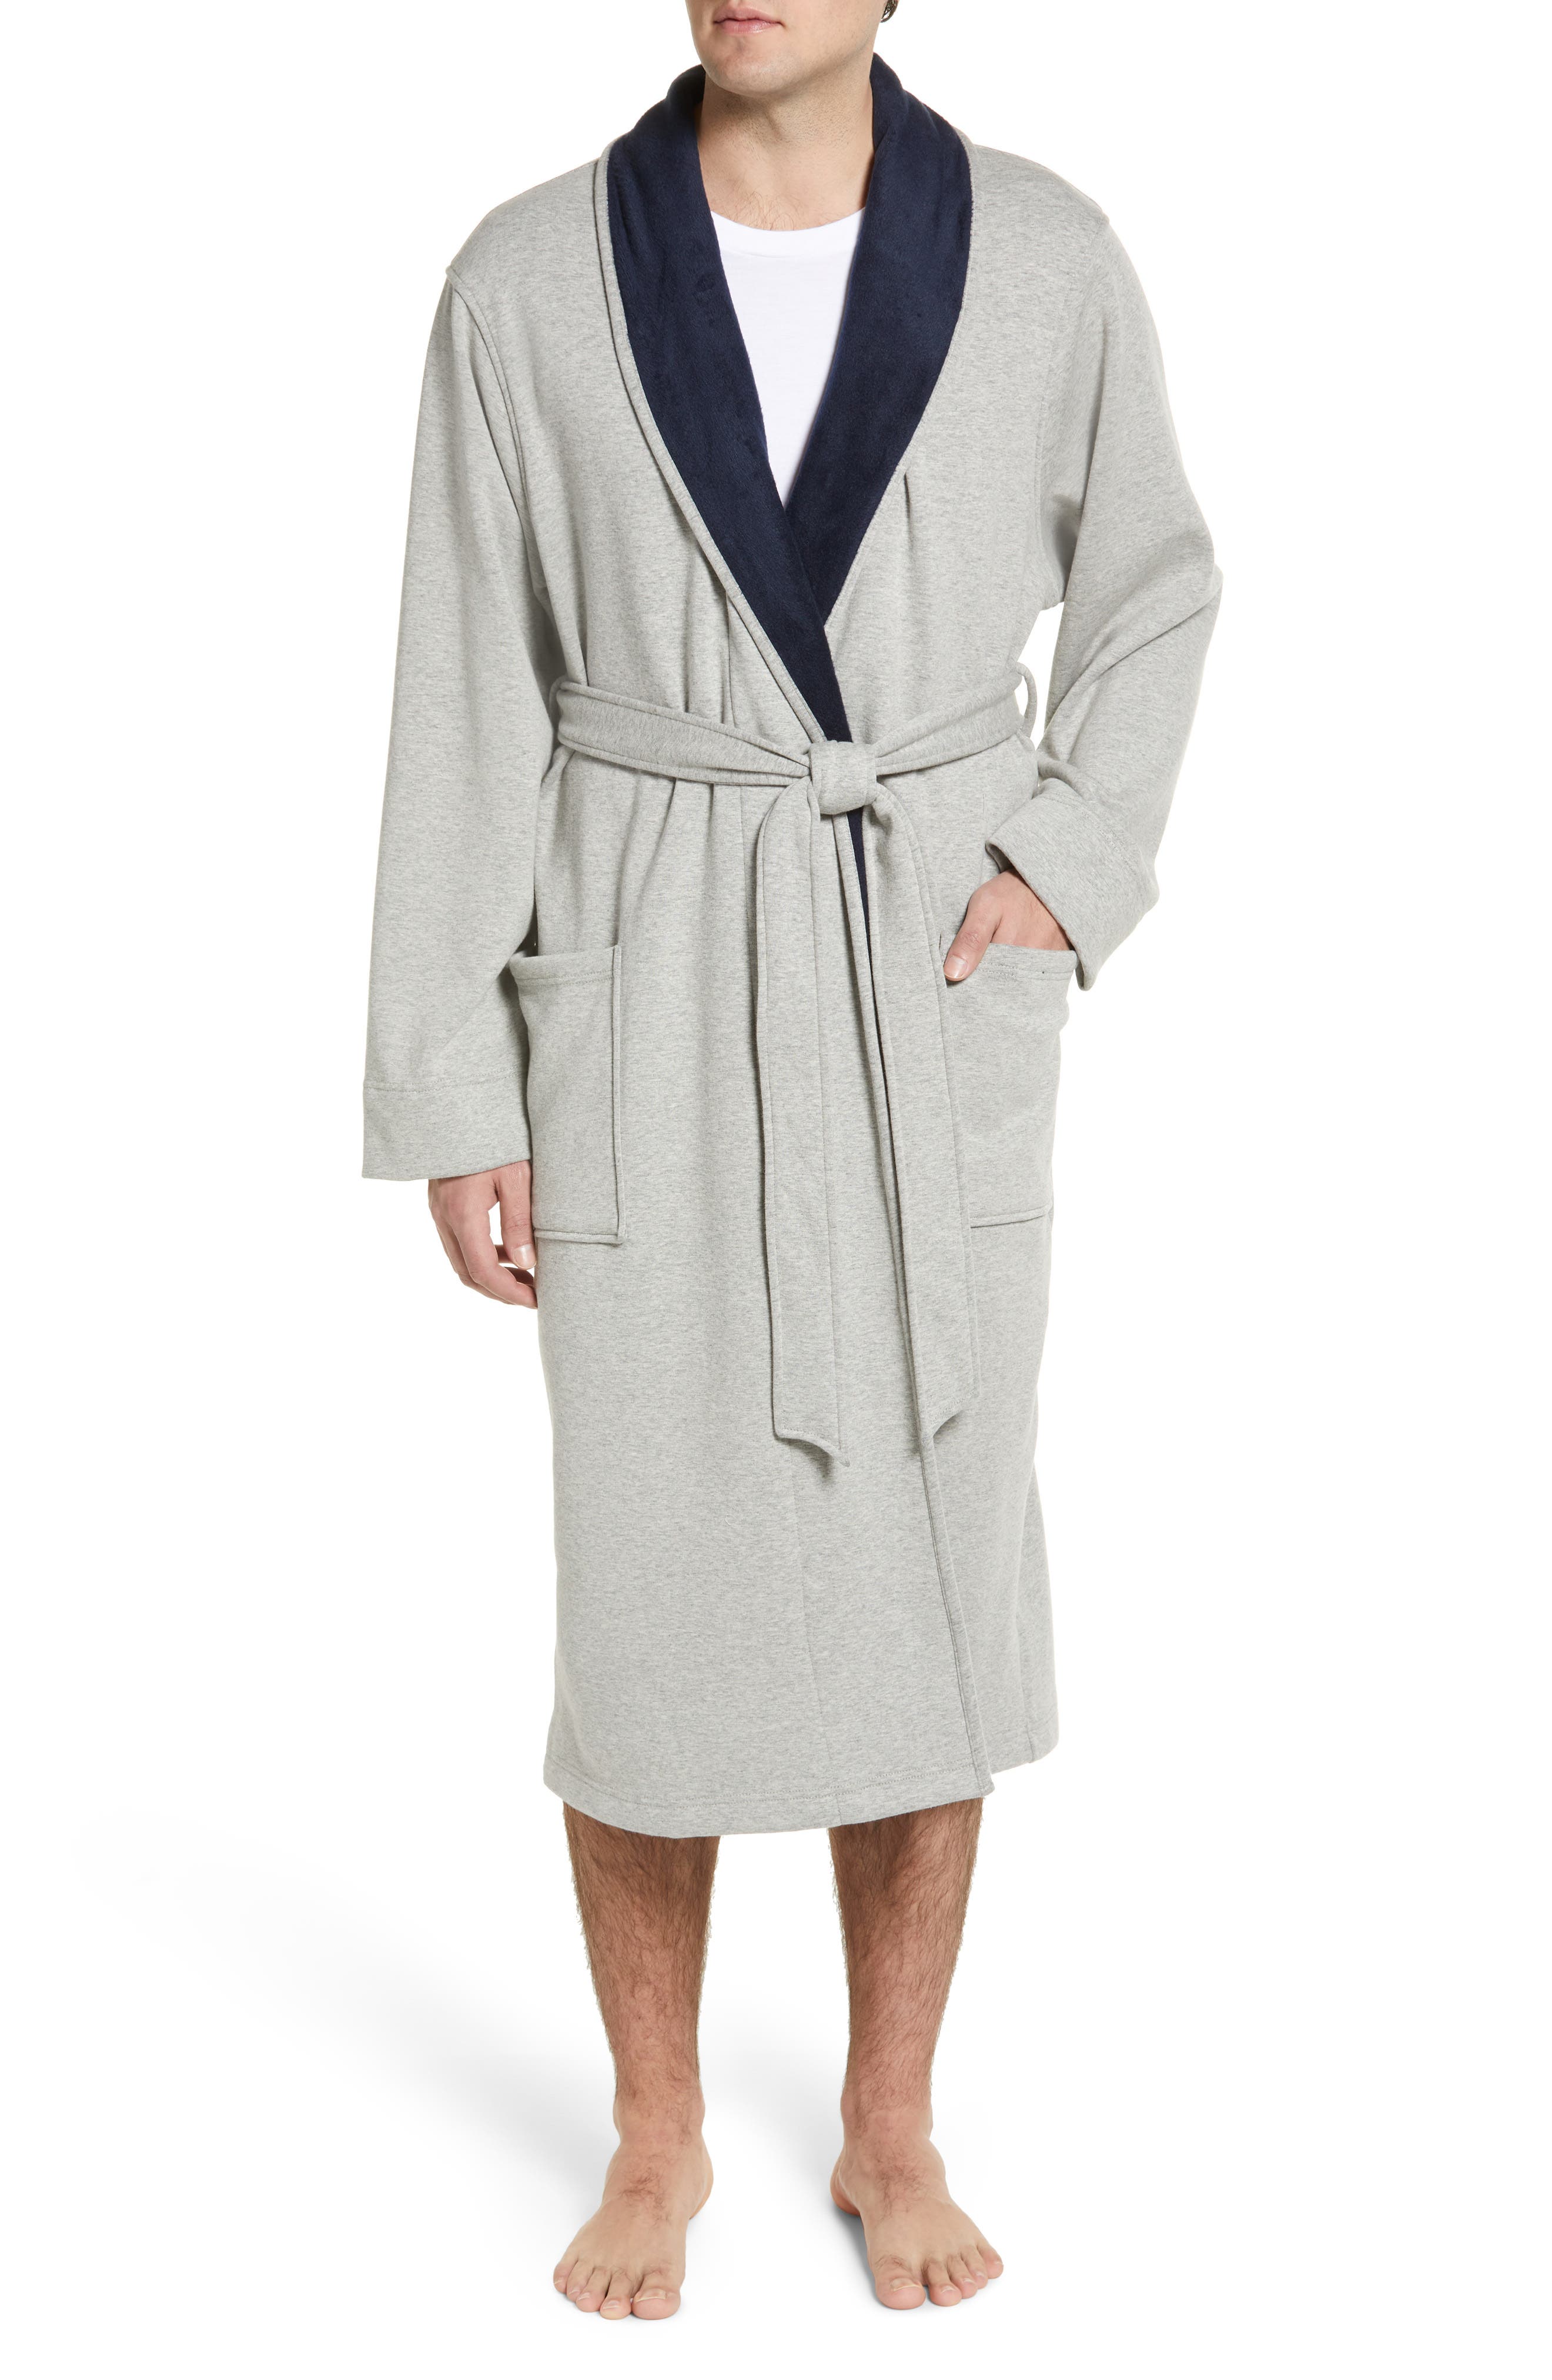 Mens Soft Essential Robe in Grey Heather at Nordstrom Men Clothing Loungewear Bathrobes 